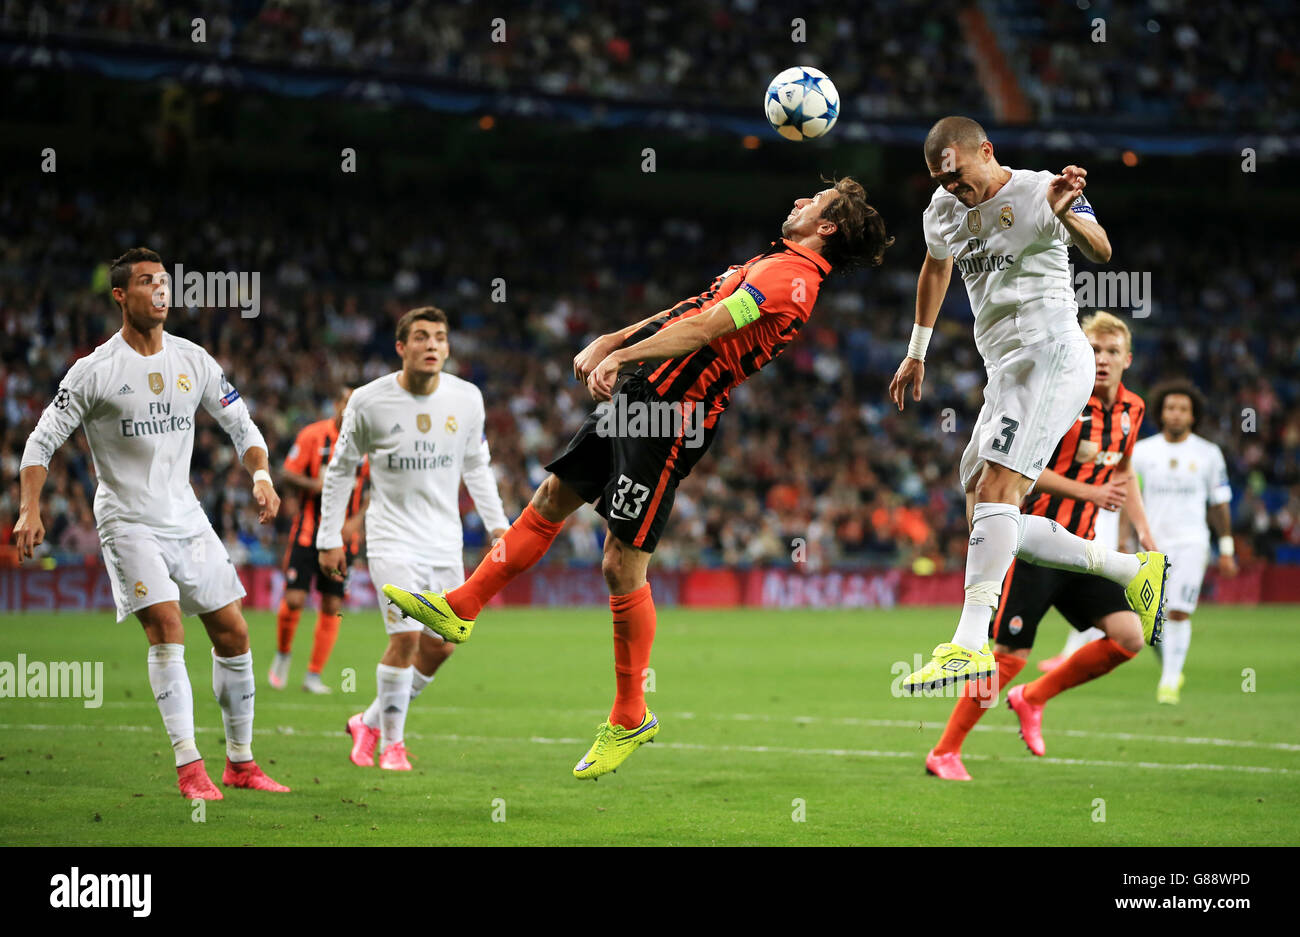 Real Madrid's Pepe wins header beating Shakhtar Donestsk's Darijo Srna Stock Photo